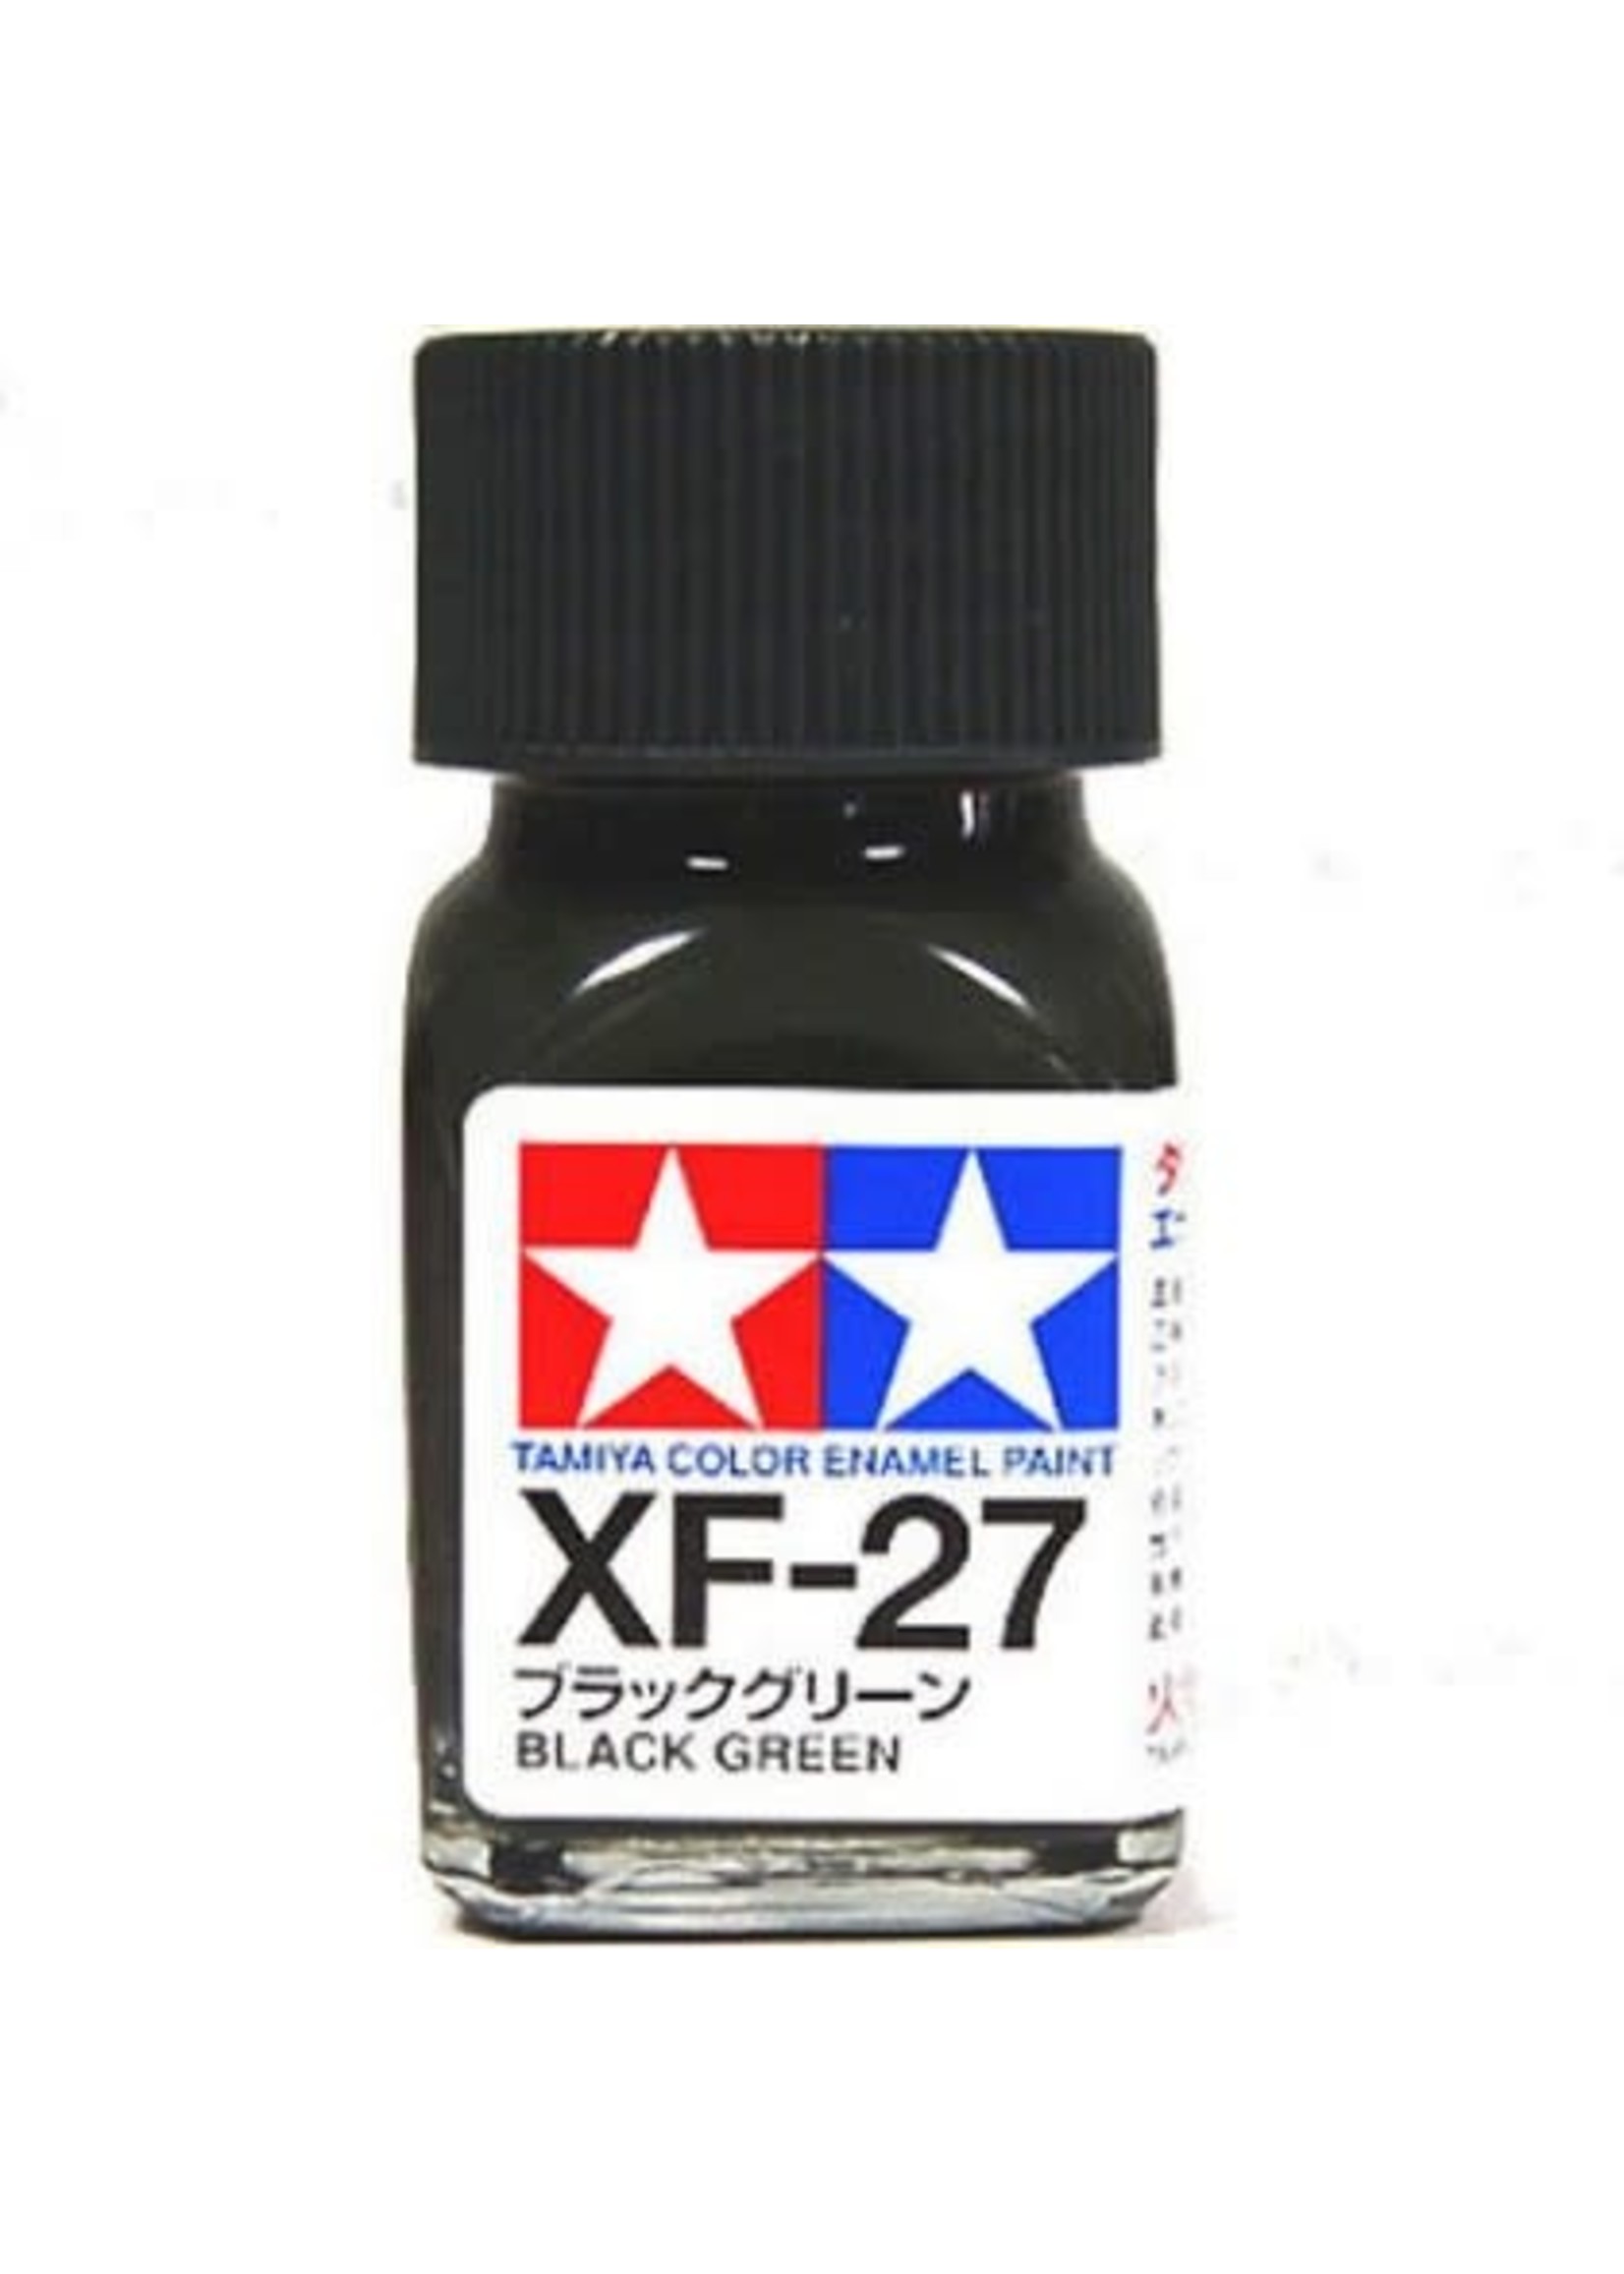 Tamiya Tamiya color enamel paint - XF-27 - Black green